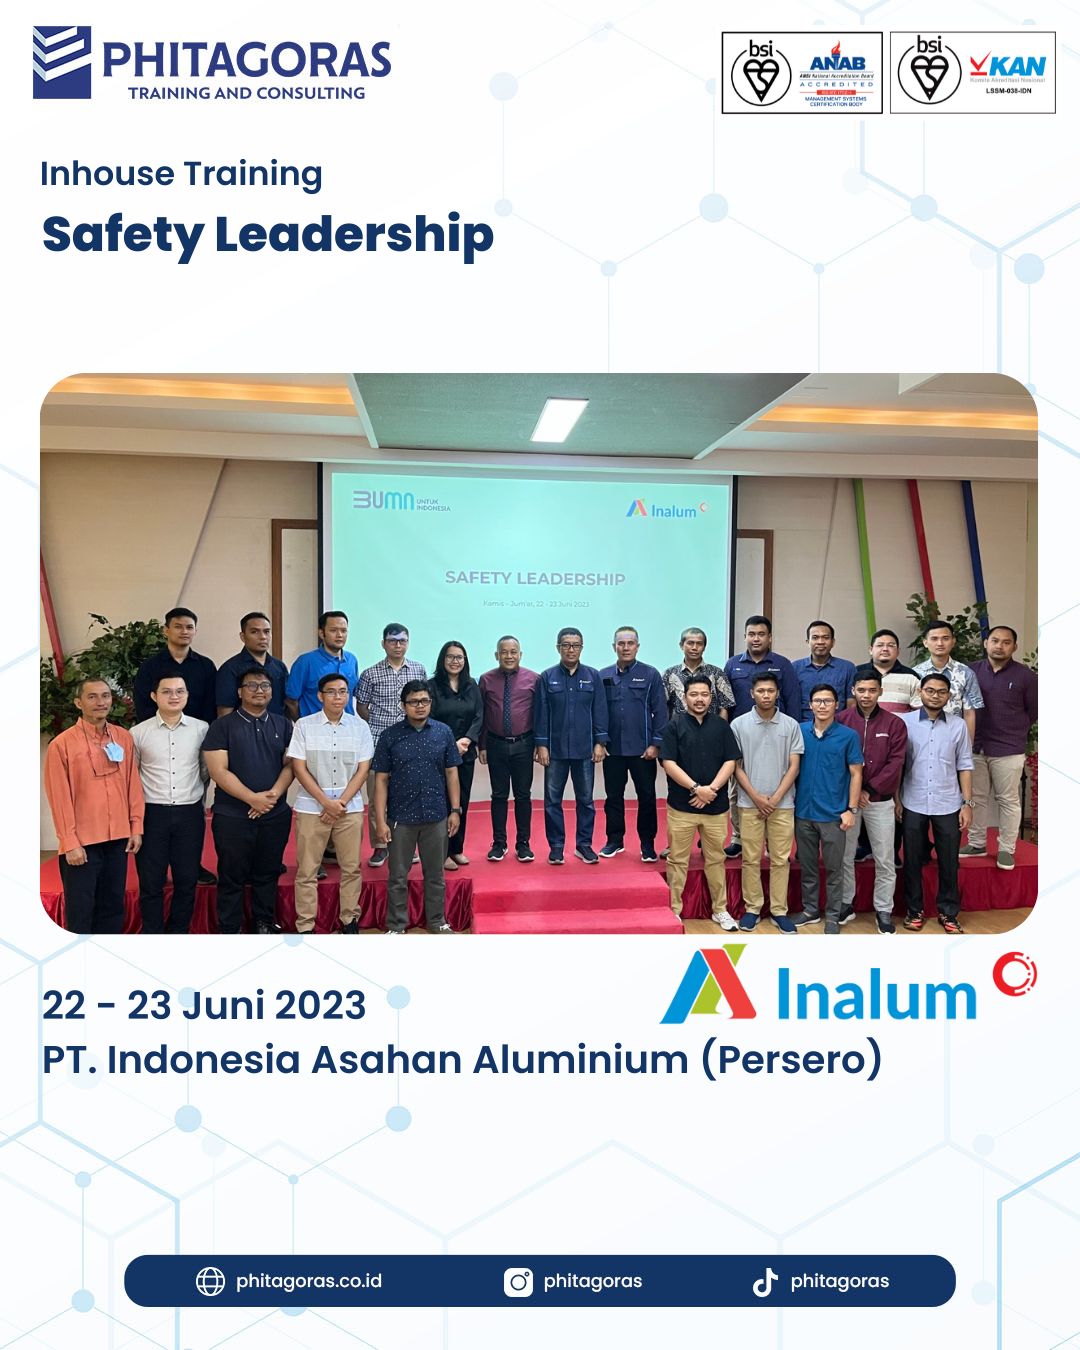 Inhouse Training Safety Leadership - PT. Indonesia Asahan Aluminium (Persero) Batch 6